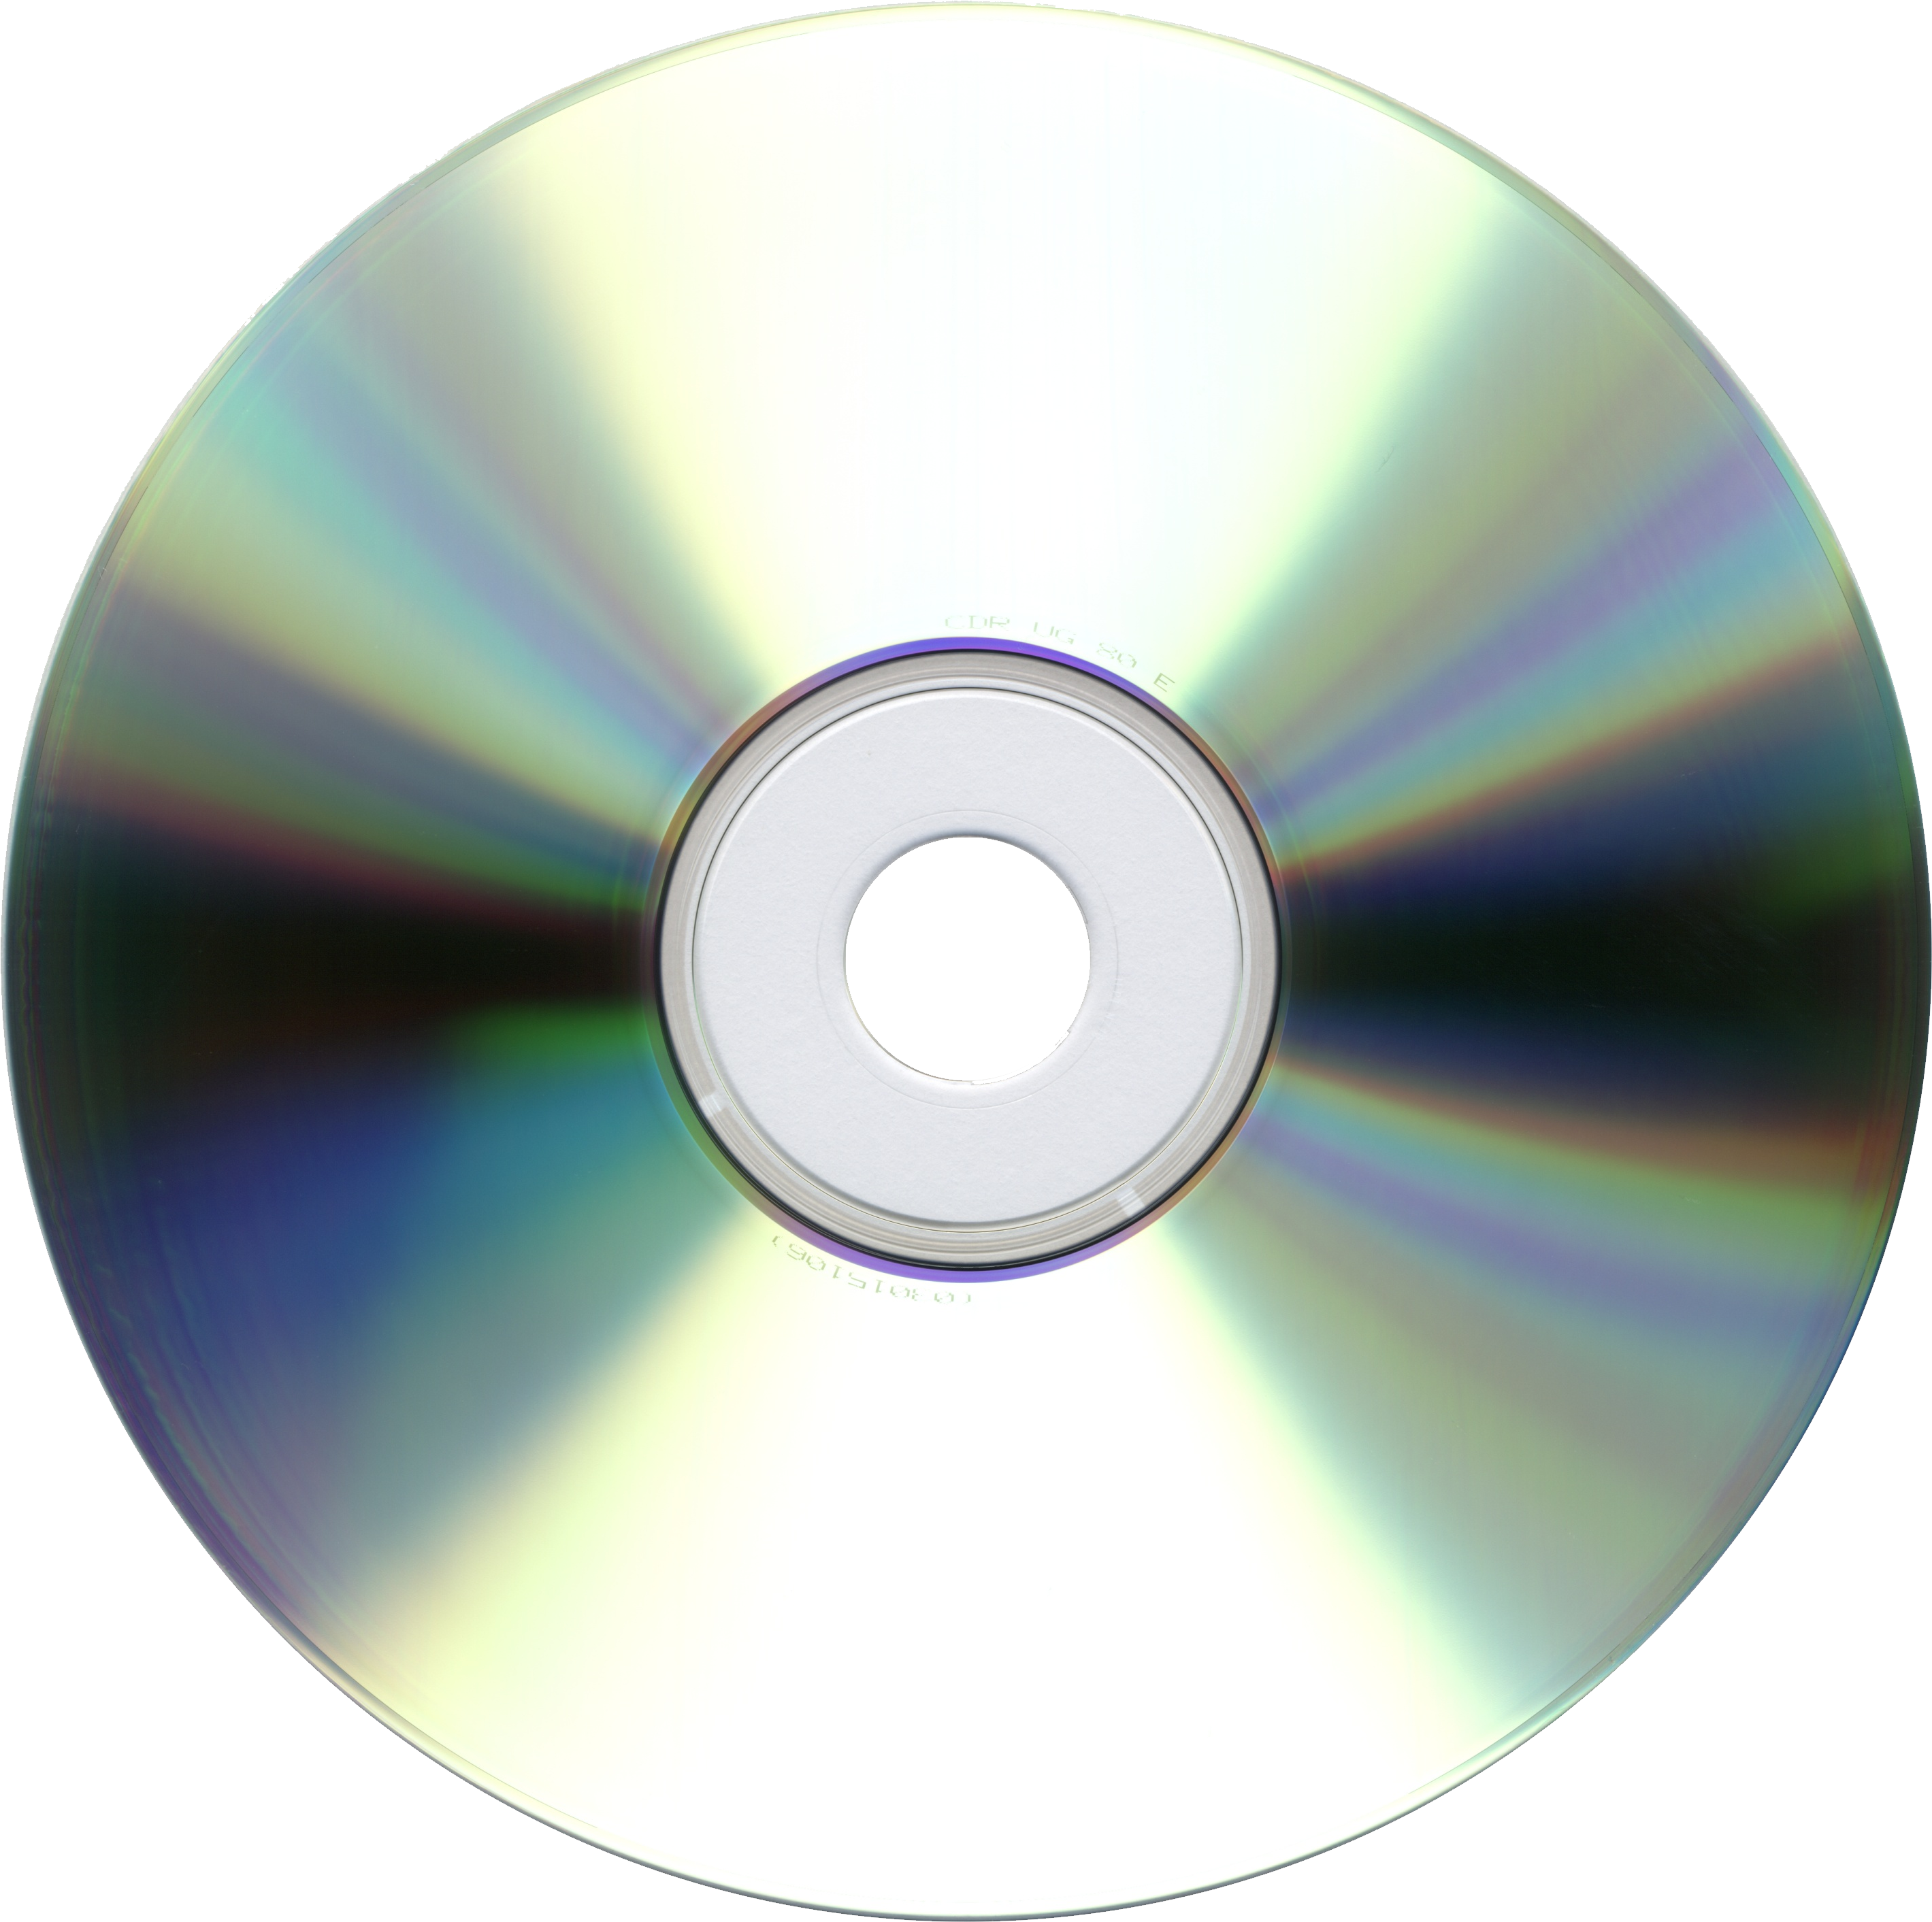 CD / DVD